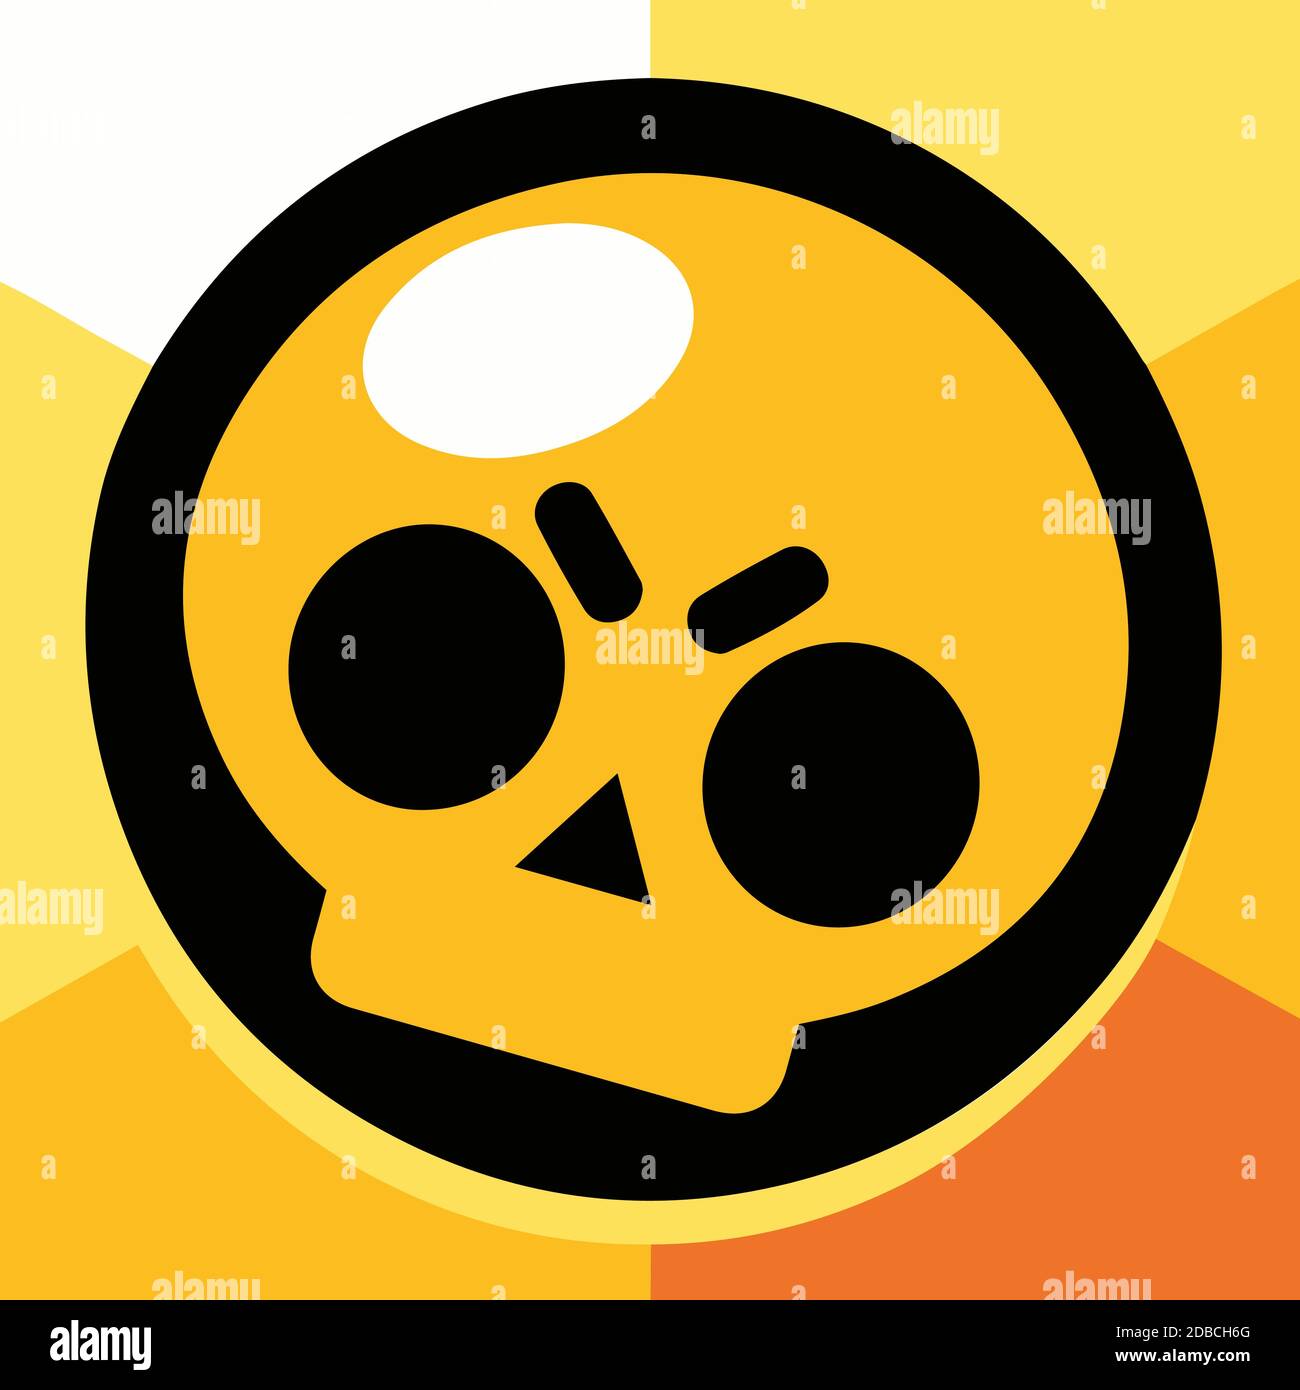 Vector Logo Of Freemium Mobile Video Game Brawl Stars Yellow Skull In Black Circle Stock Vector Image Art Alamy - brawl stars logo images